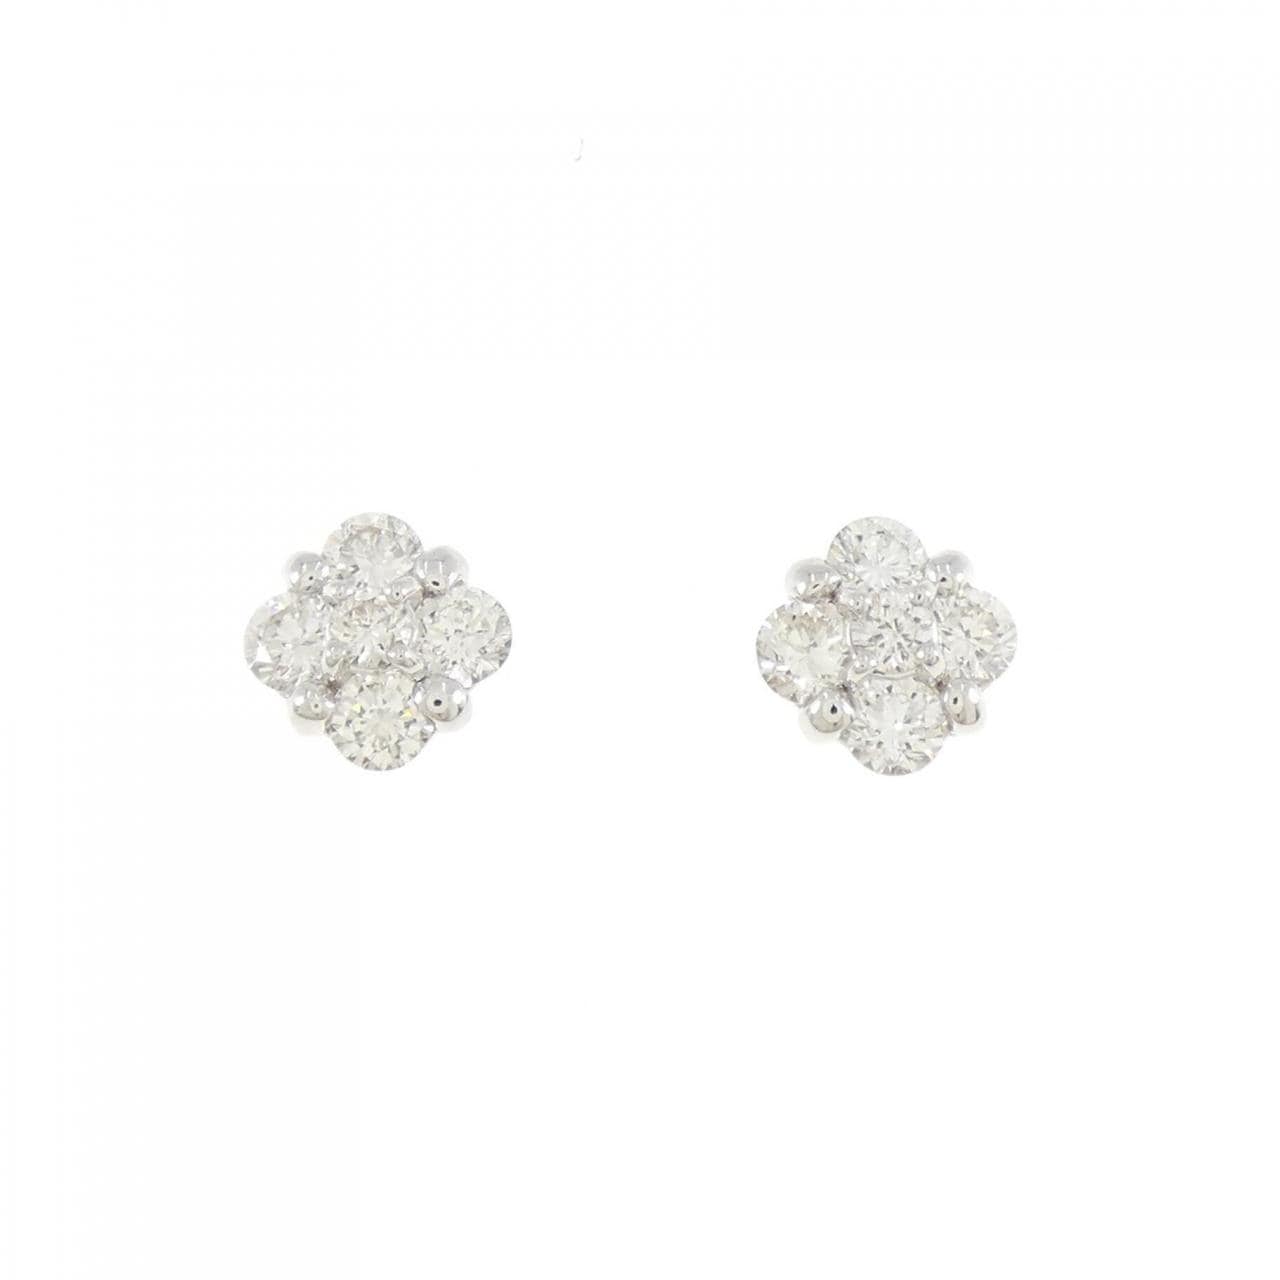 K18WG Flower Diamond Earrings 0.90CT